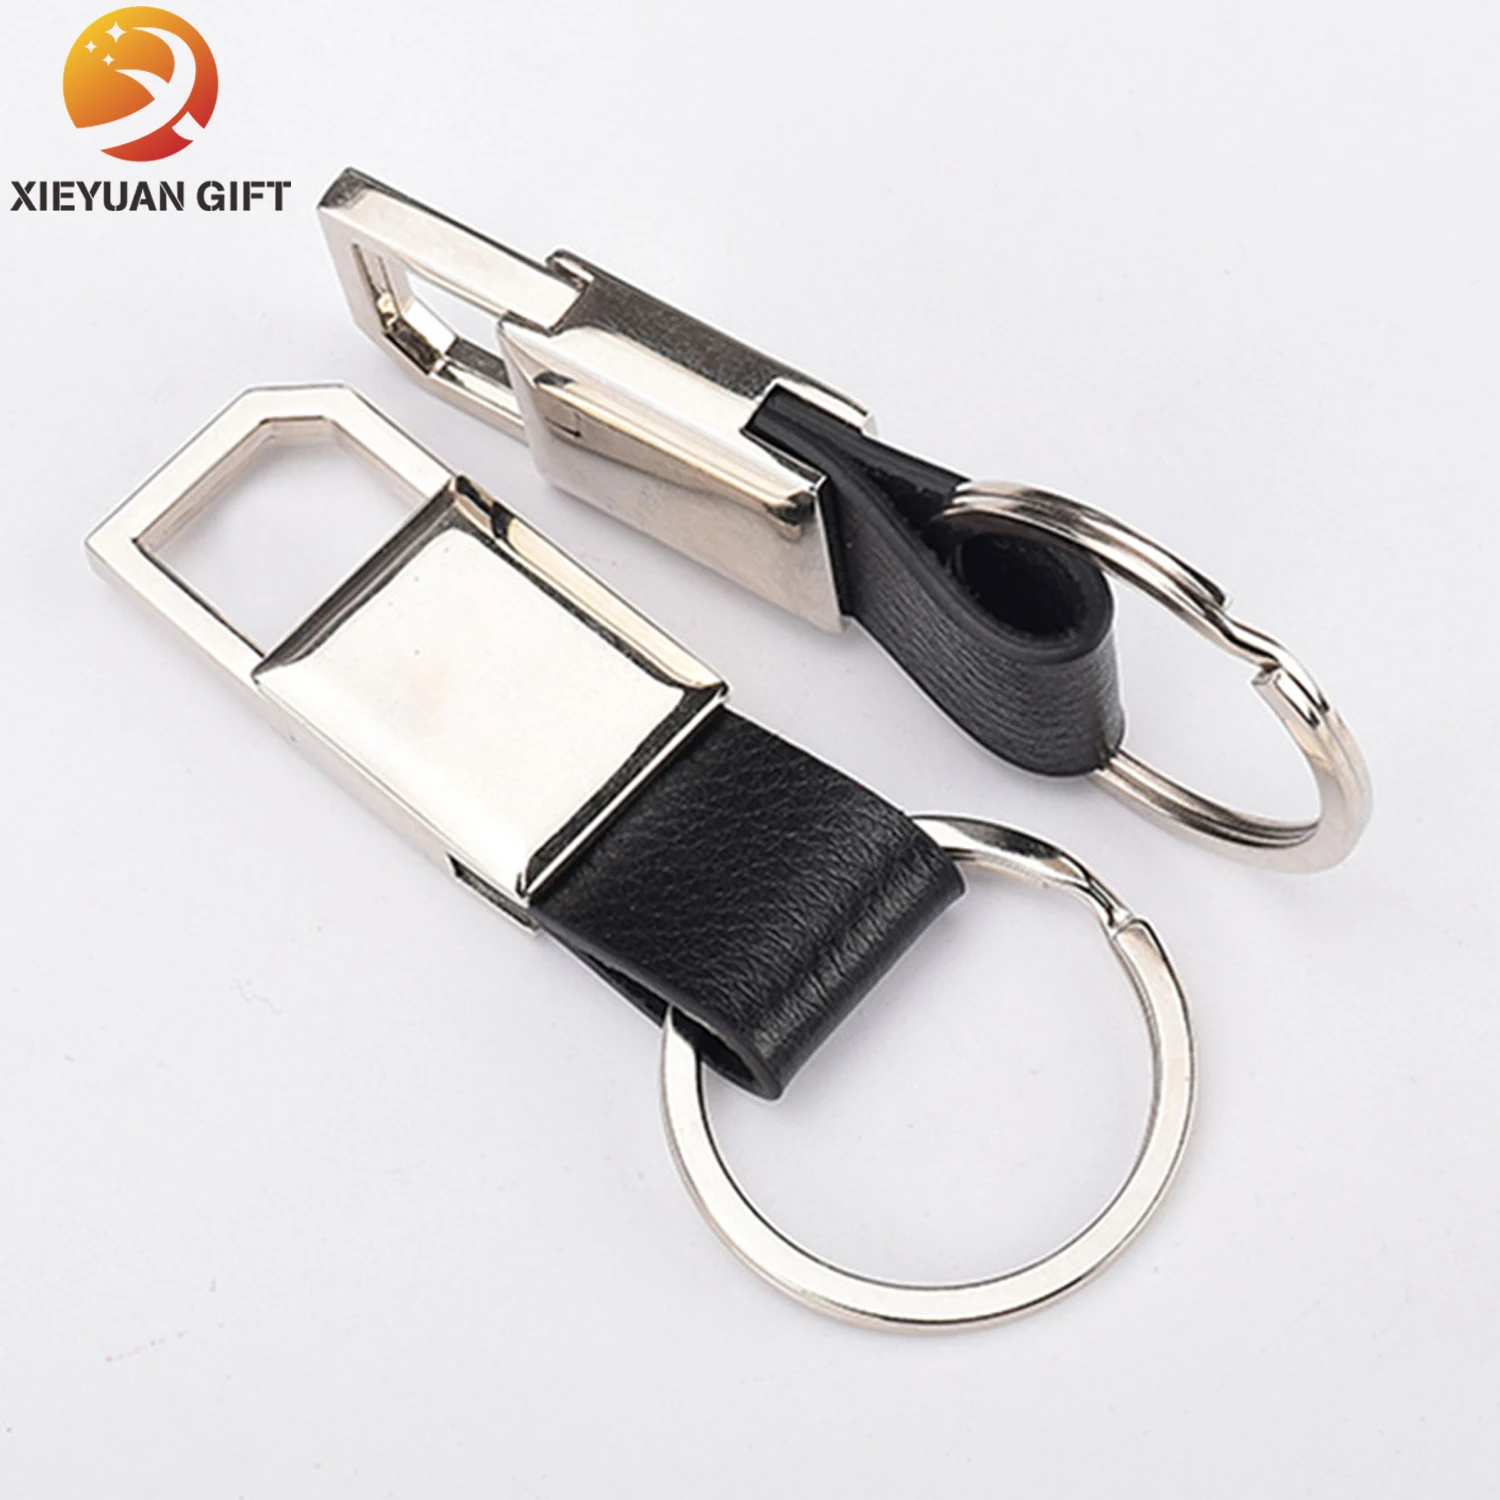 Wholesale Leather Belt Flat Metal Keychains For Souvenir - Buy ...